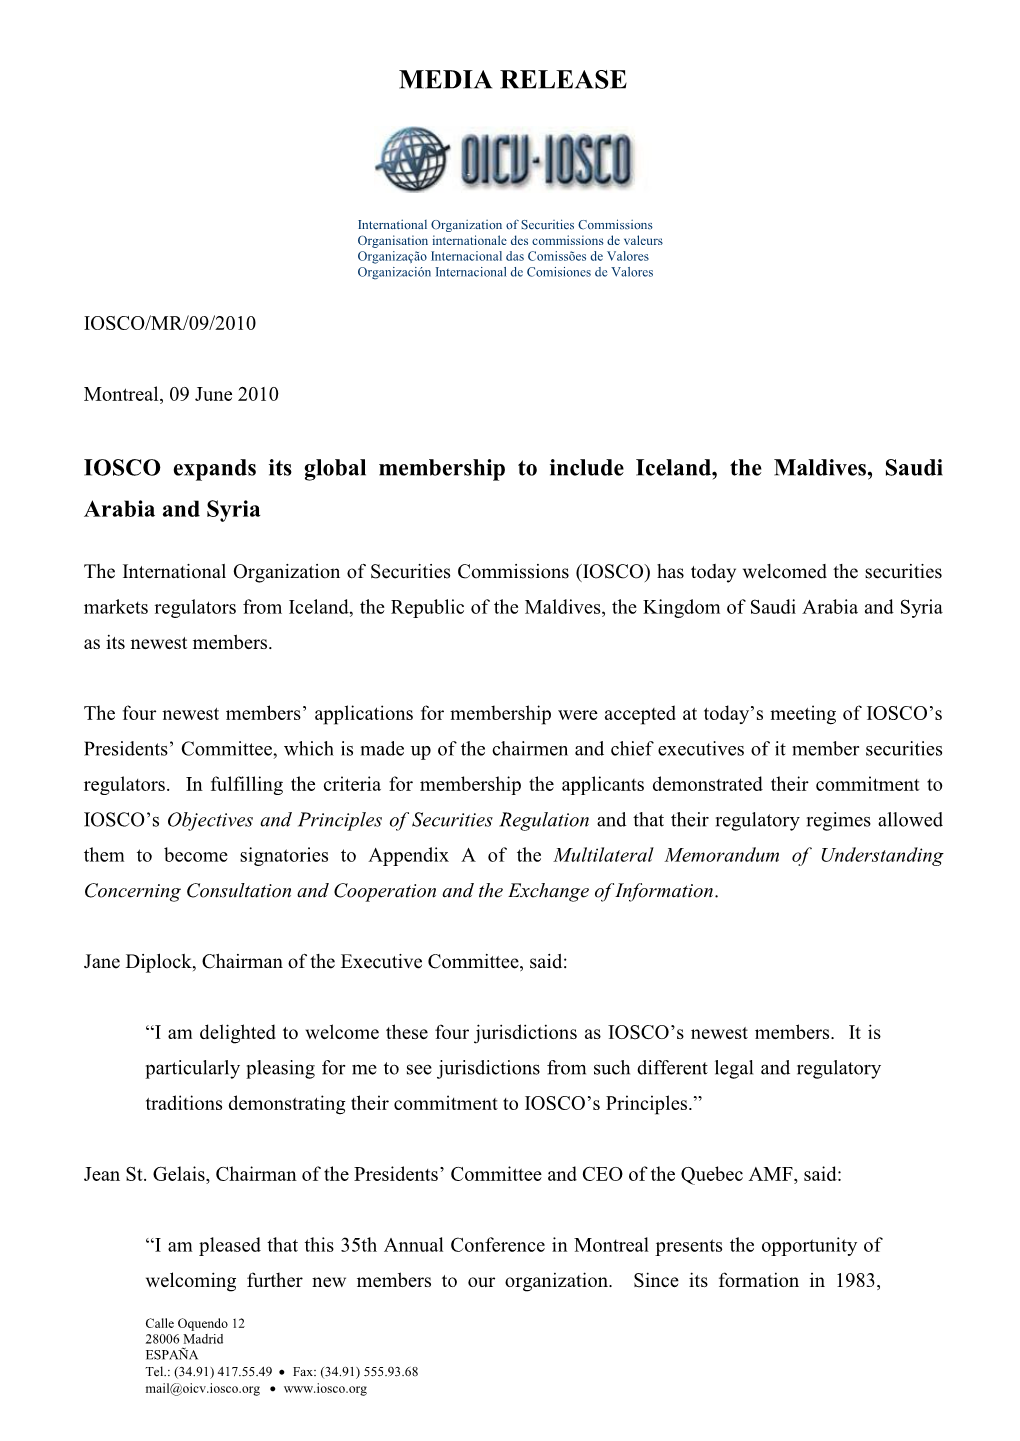 IOSCO Expands Its Global Membership to Include Iceland, the Maldives, Saudi Arabia and Syria